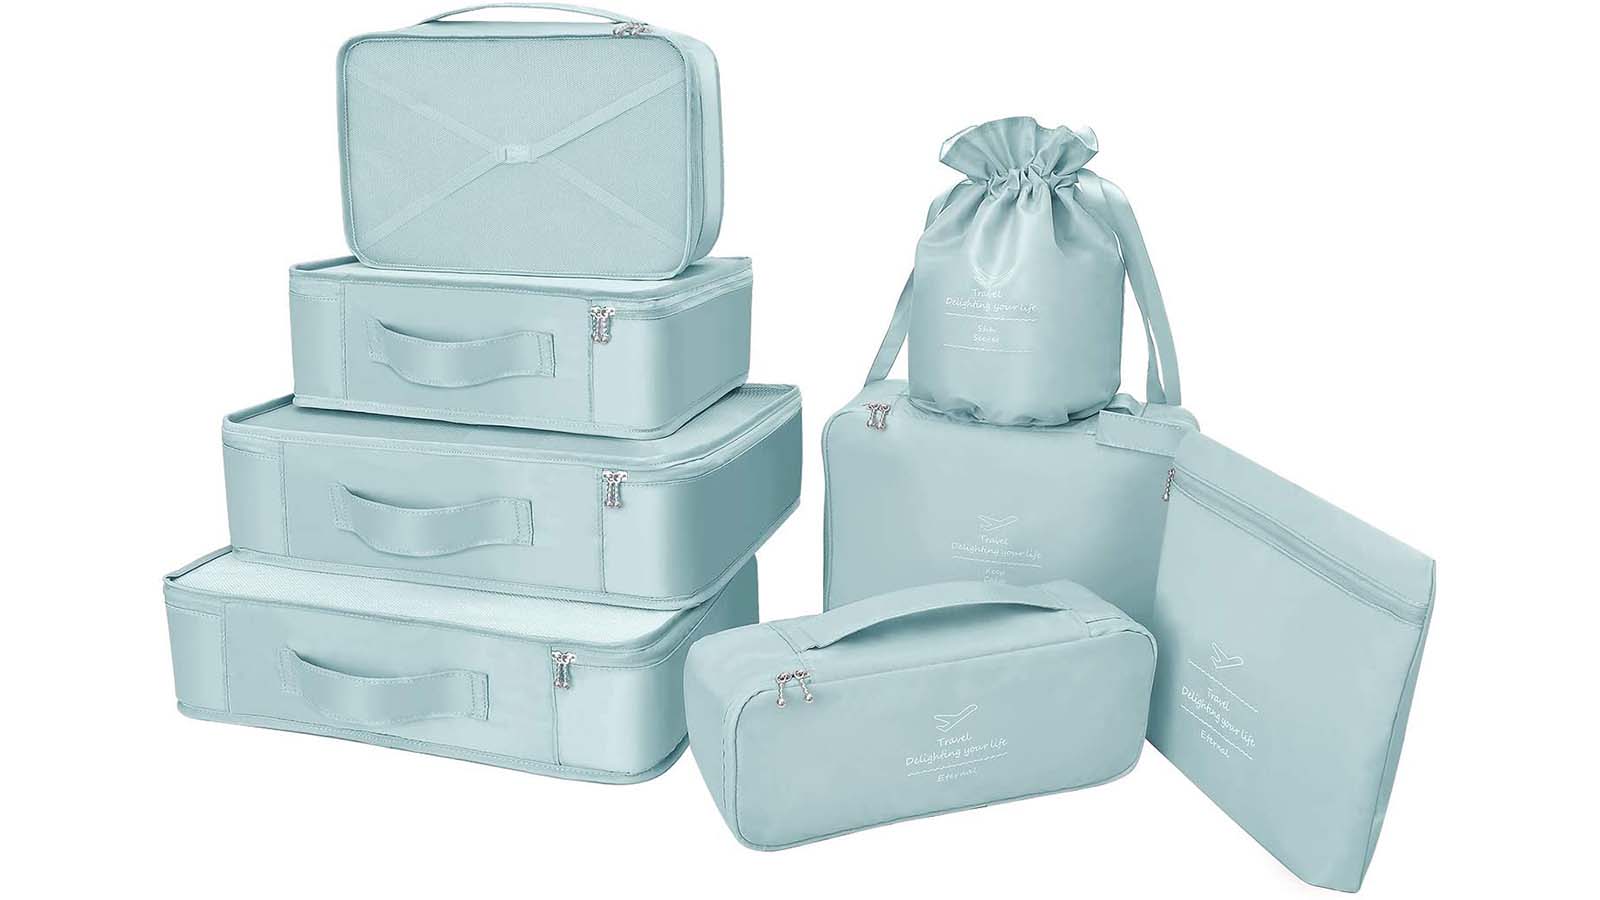 Buy RD MALL Women's Bra Storage Bag Travel Packaging Cube